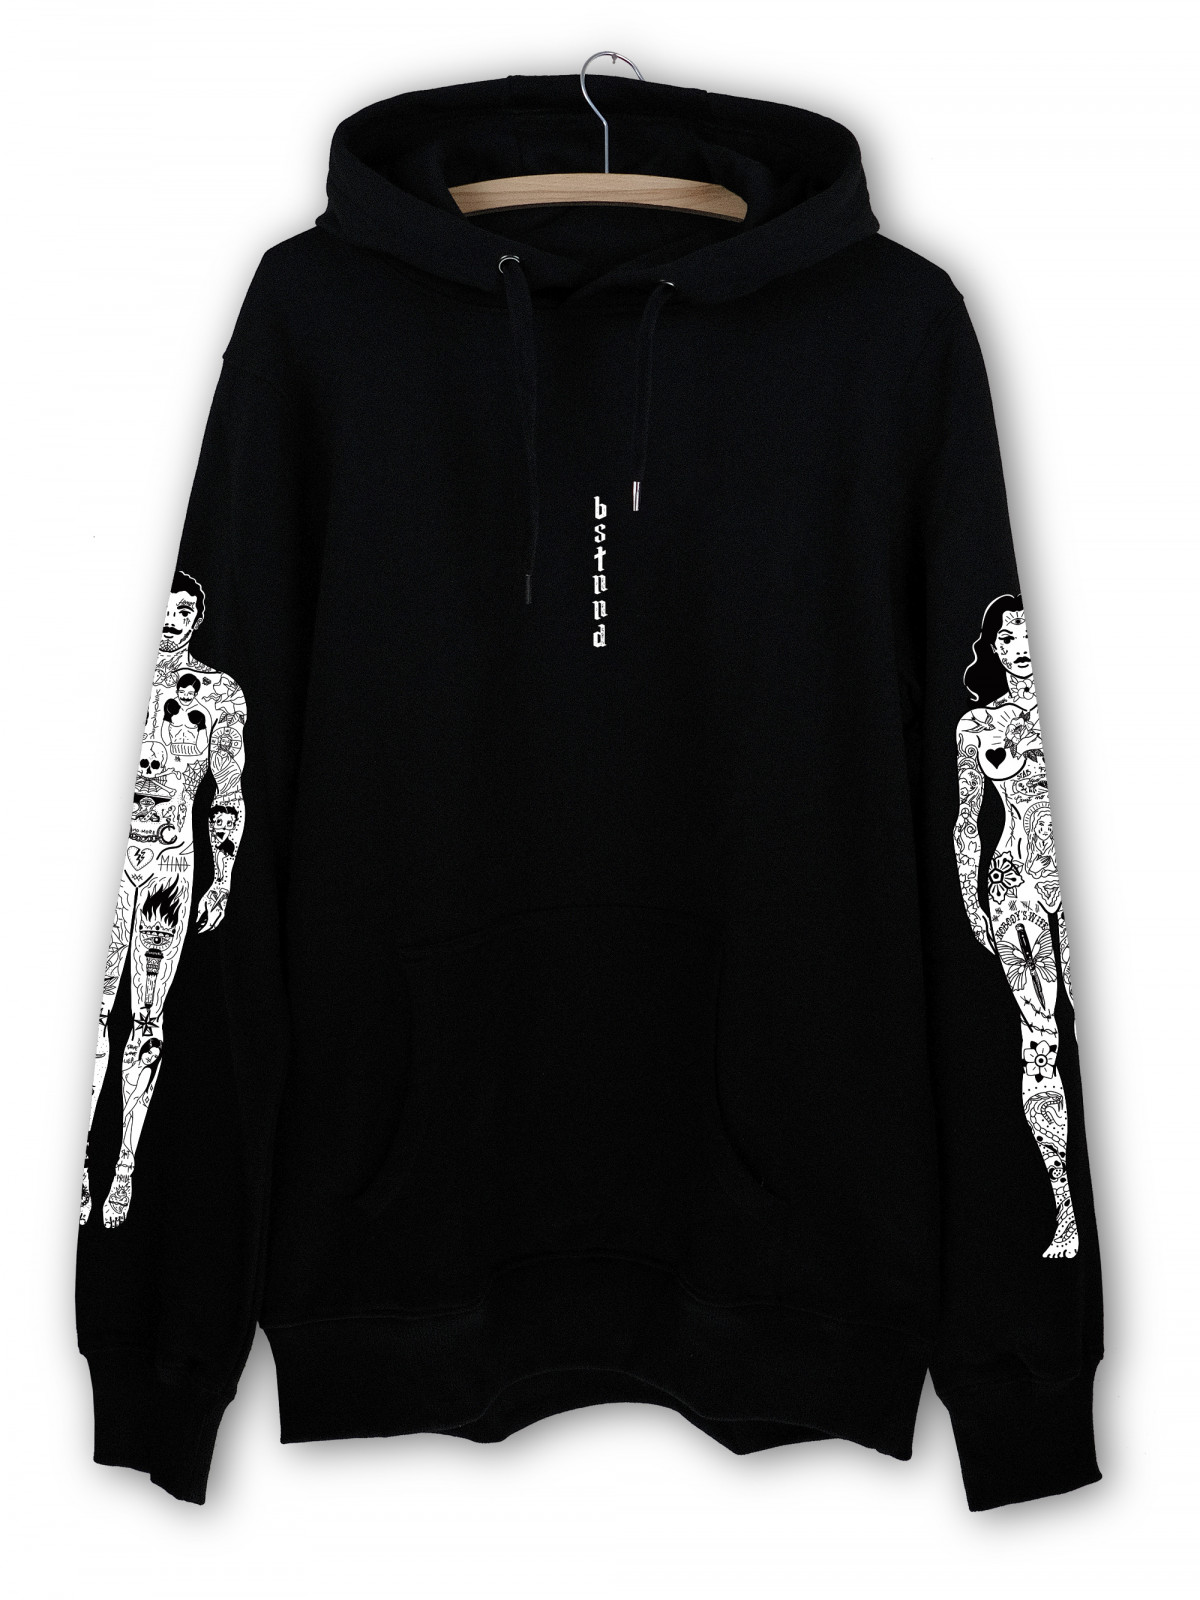 'Ink Lovers' hoodie for men and women by swiss streetwear brand bastonnade clothing.